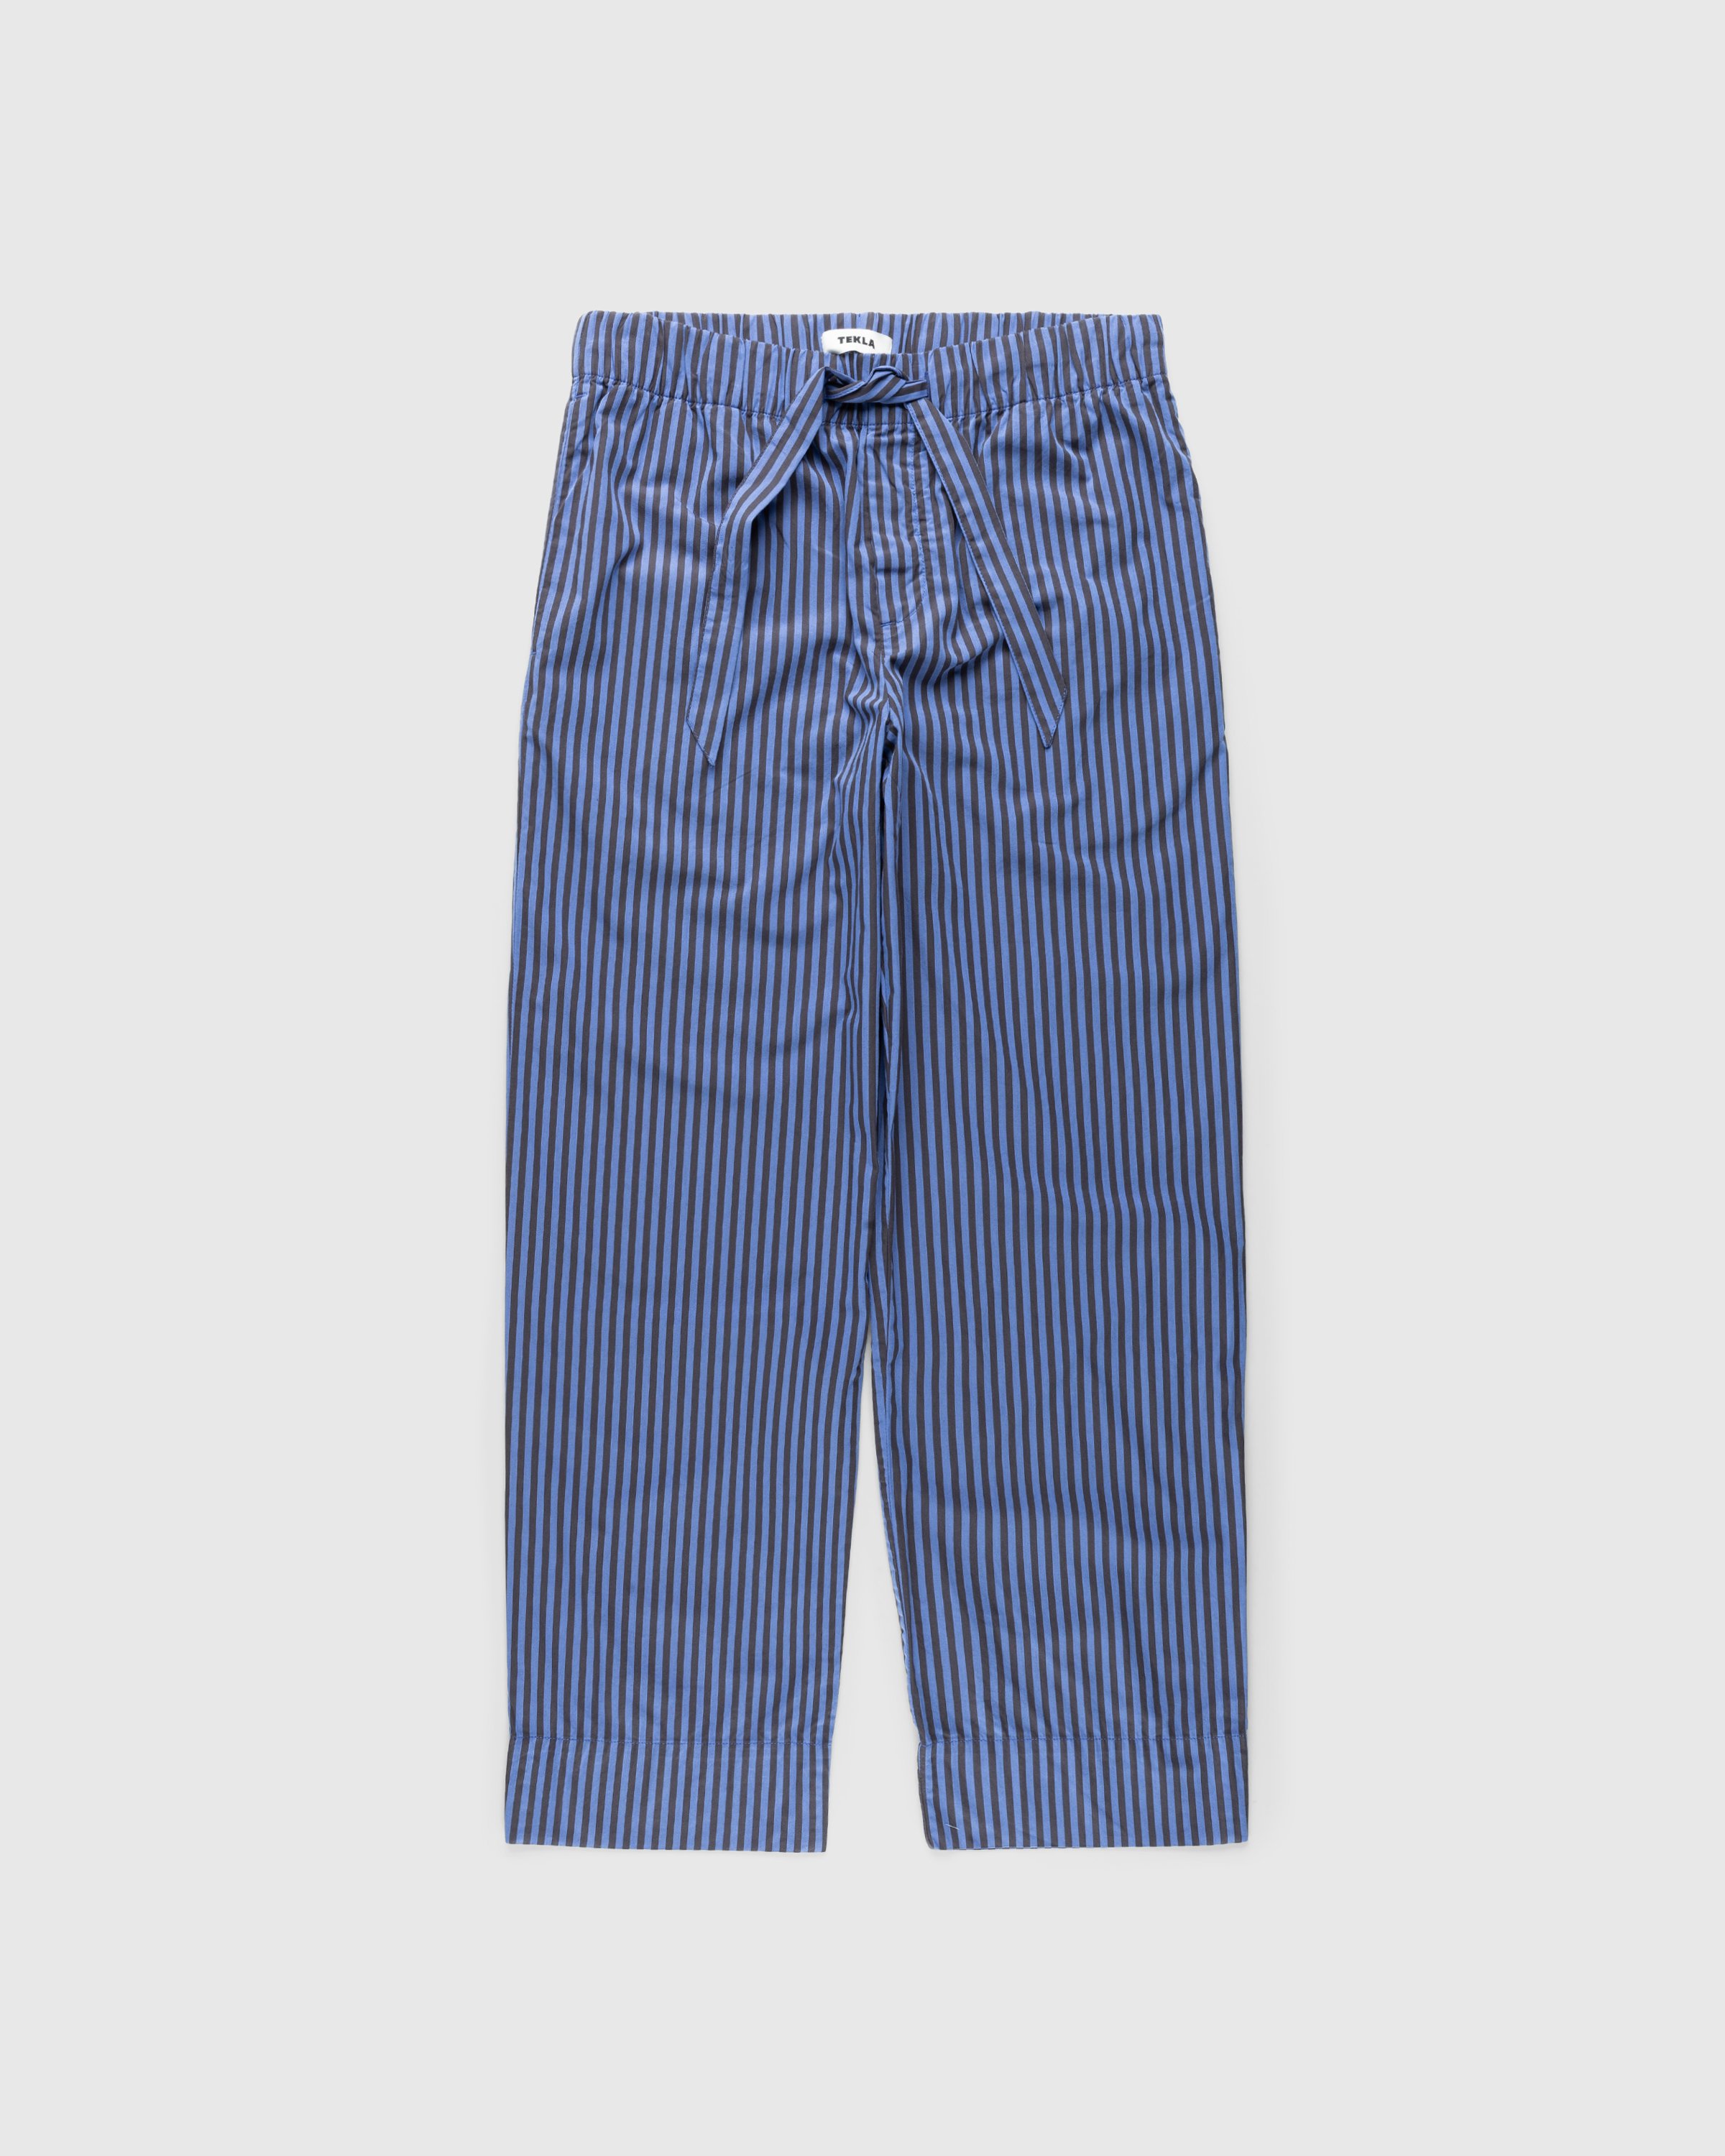 Tekla – Cotton Poplin Pyjamas Pants Coffee | Highsnobiety Shop